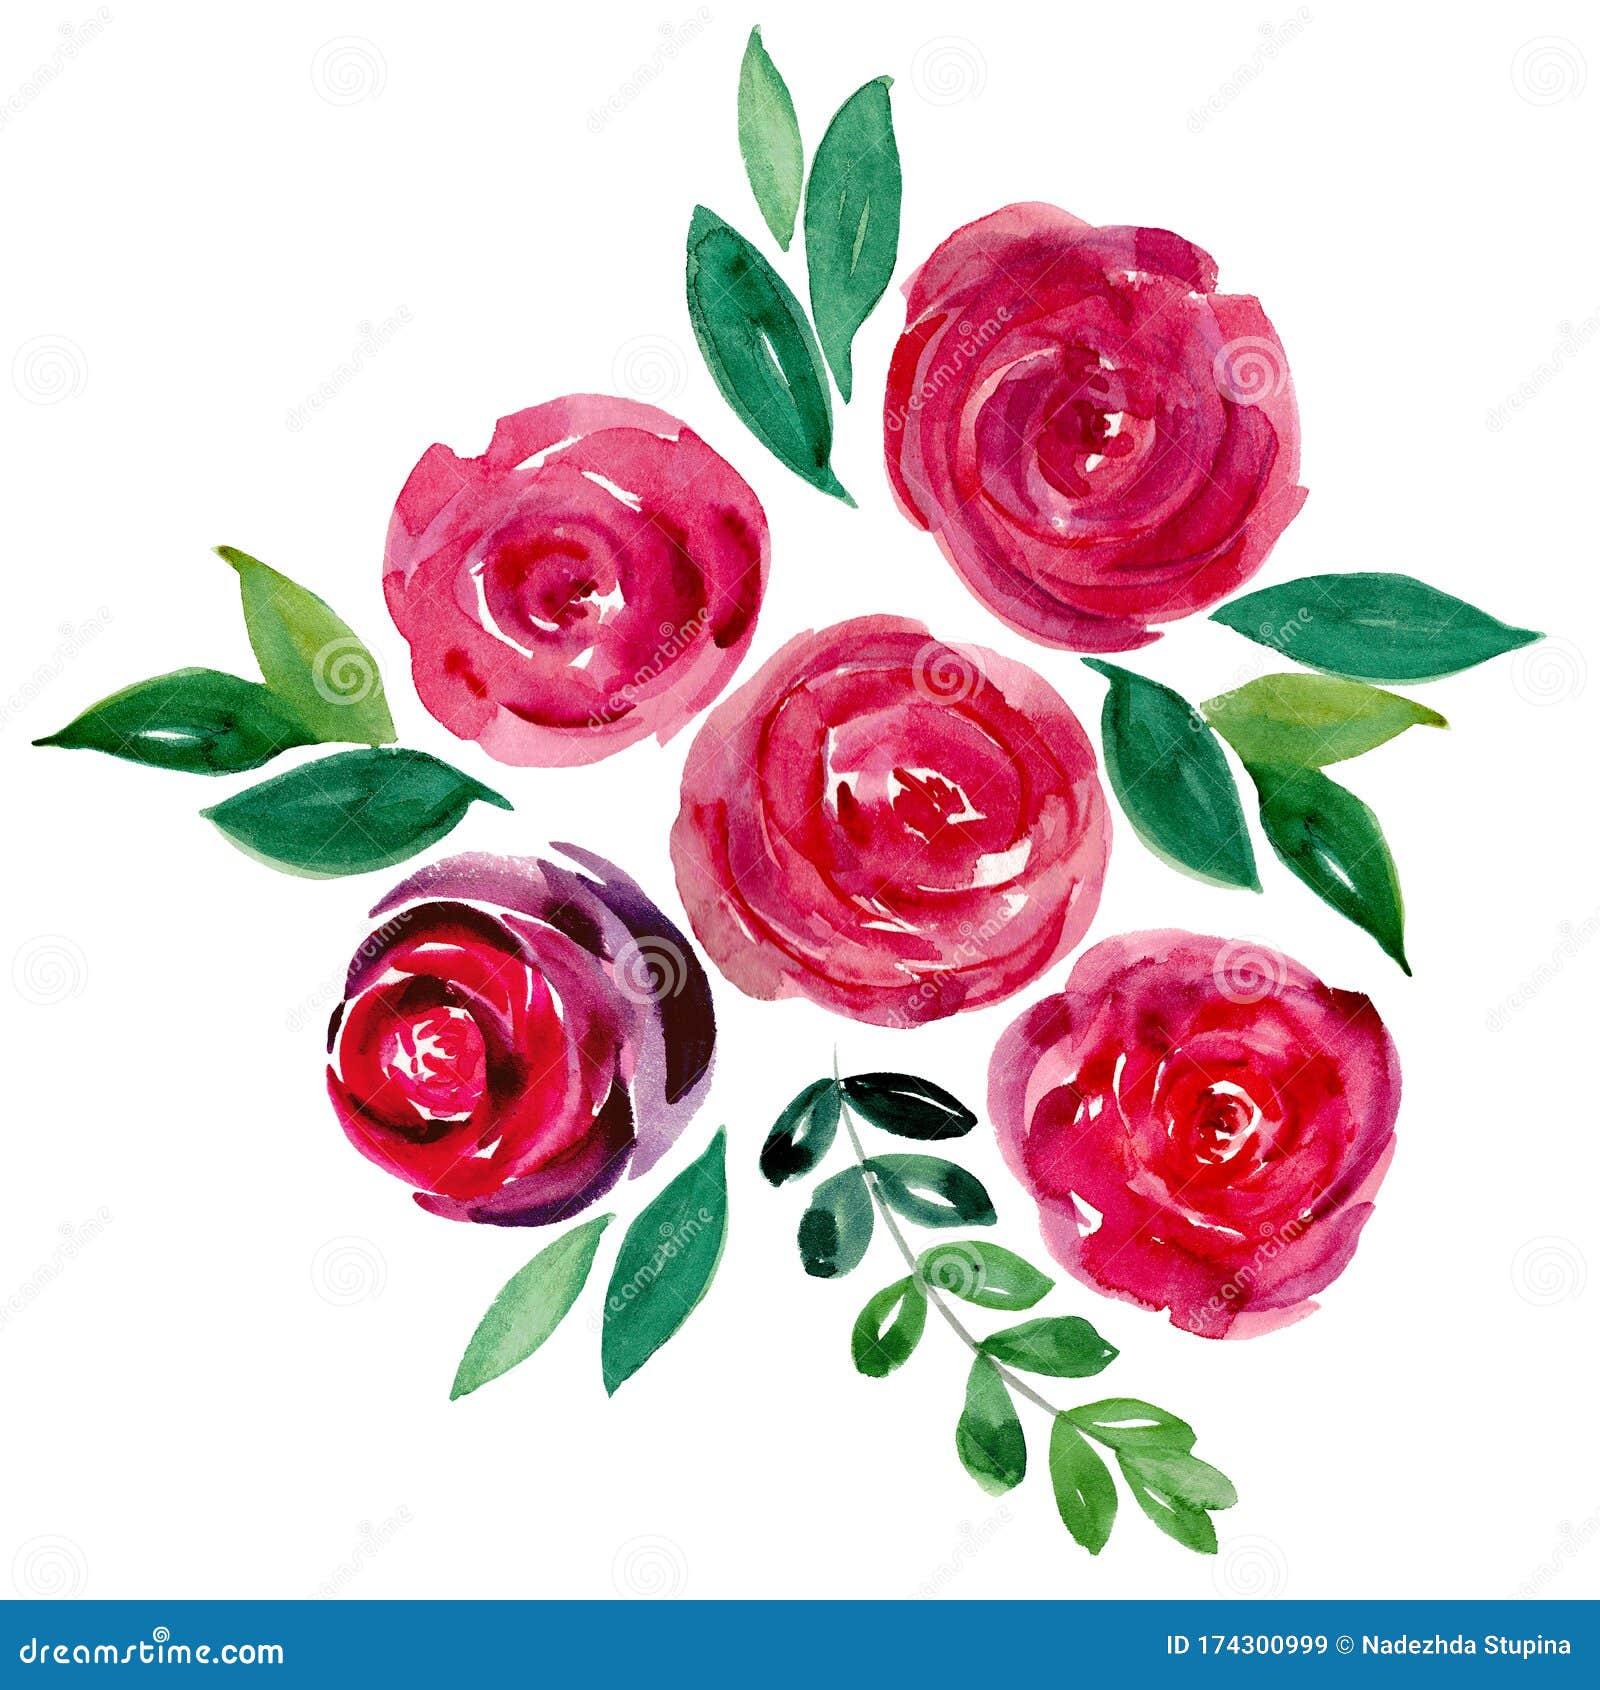 Vintage Floral Illustration - Red And Pink Watercolor Roses Stock Image - Image Of Leaf, Boho: 174300999